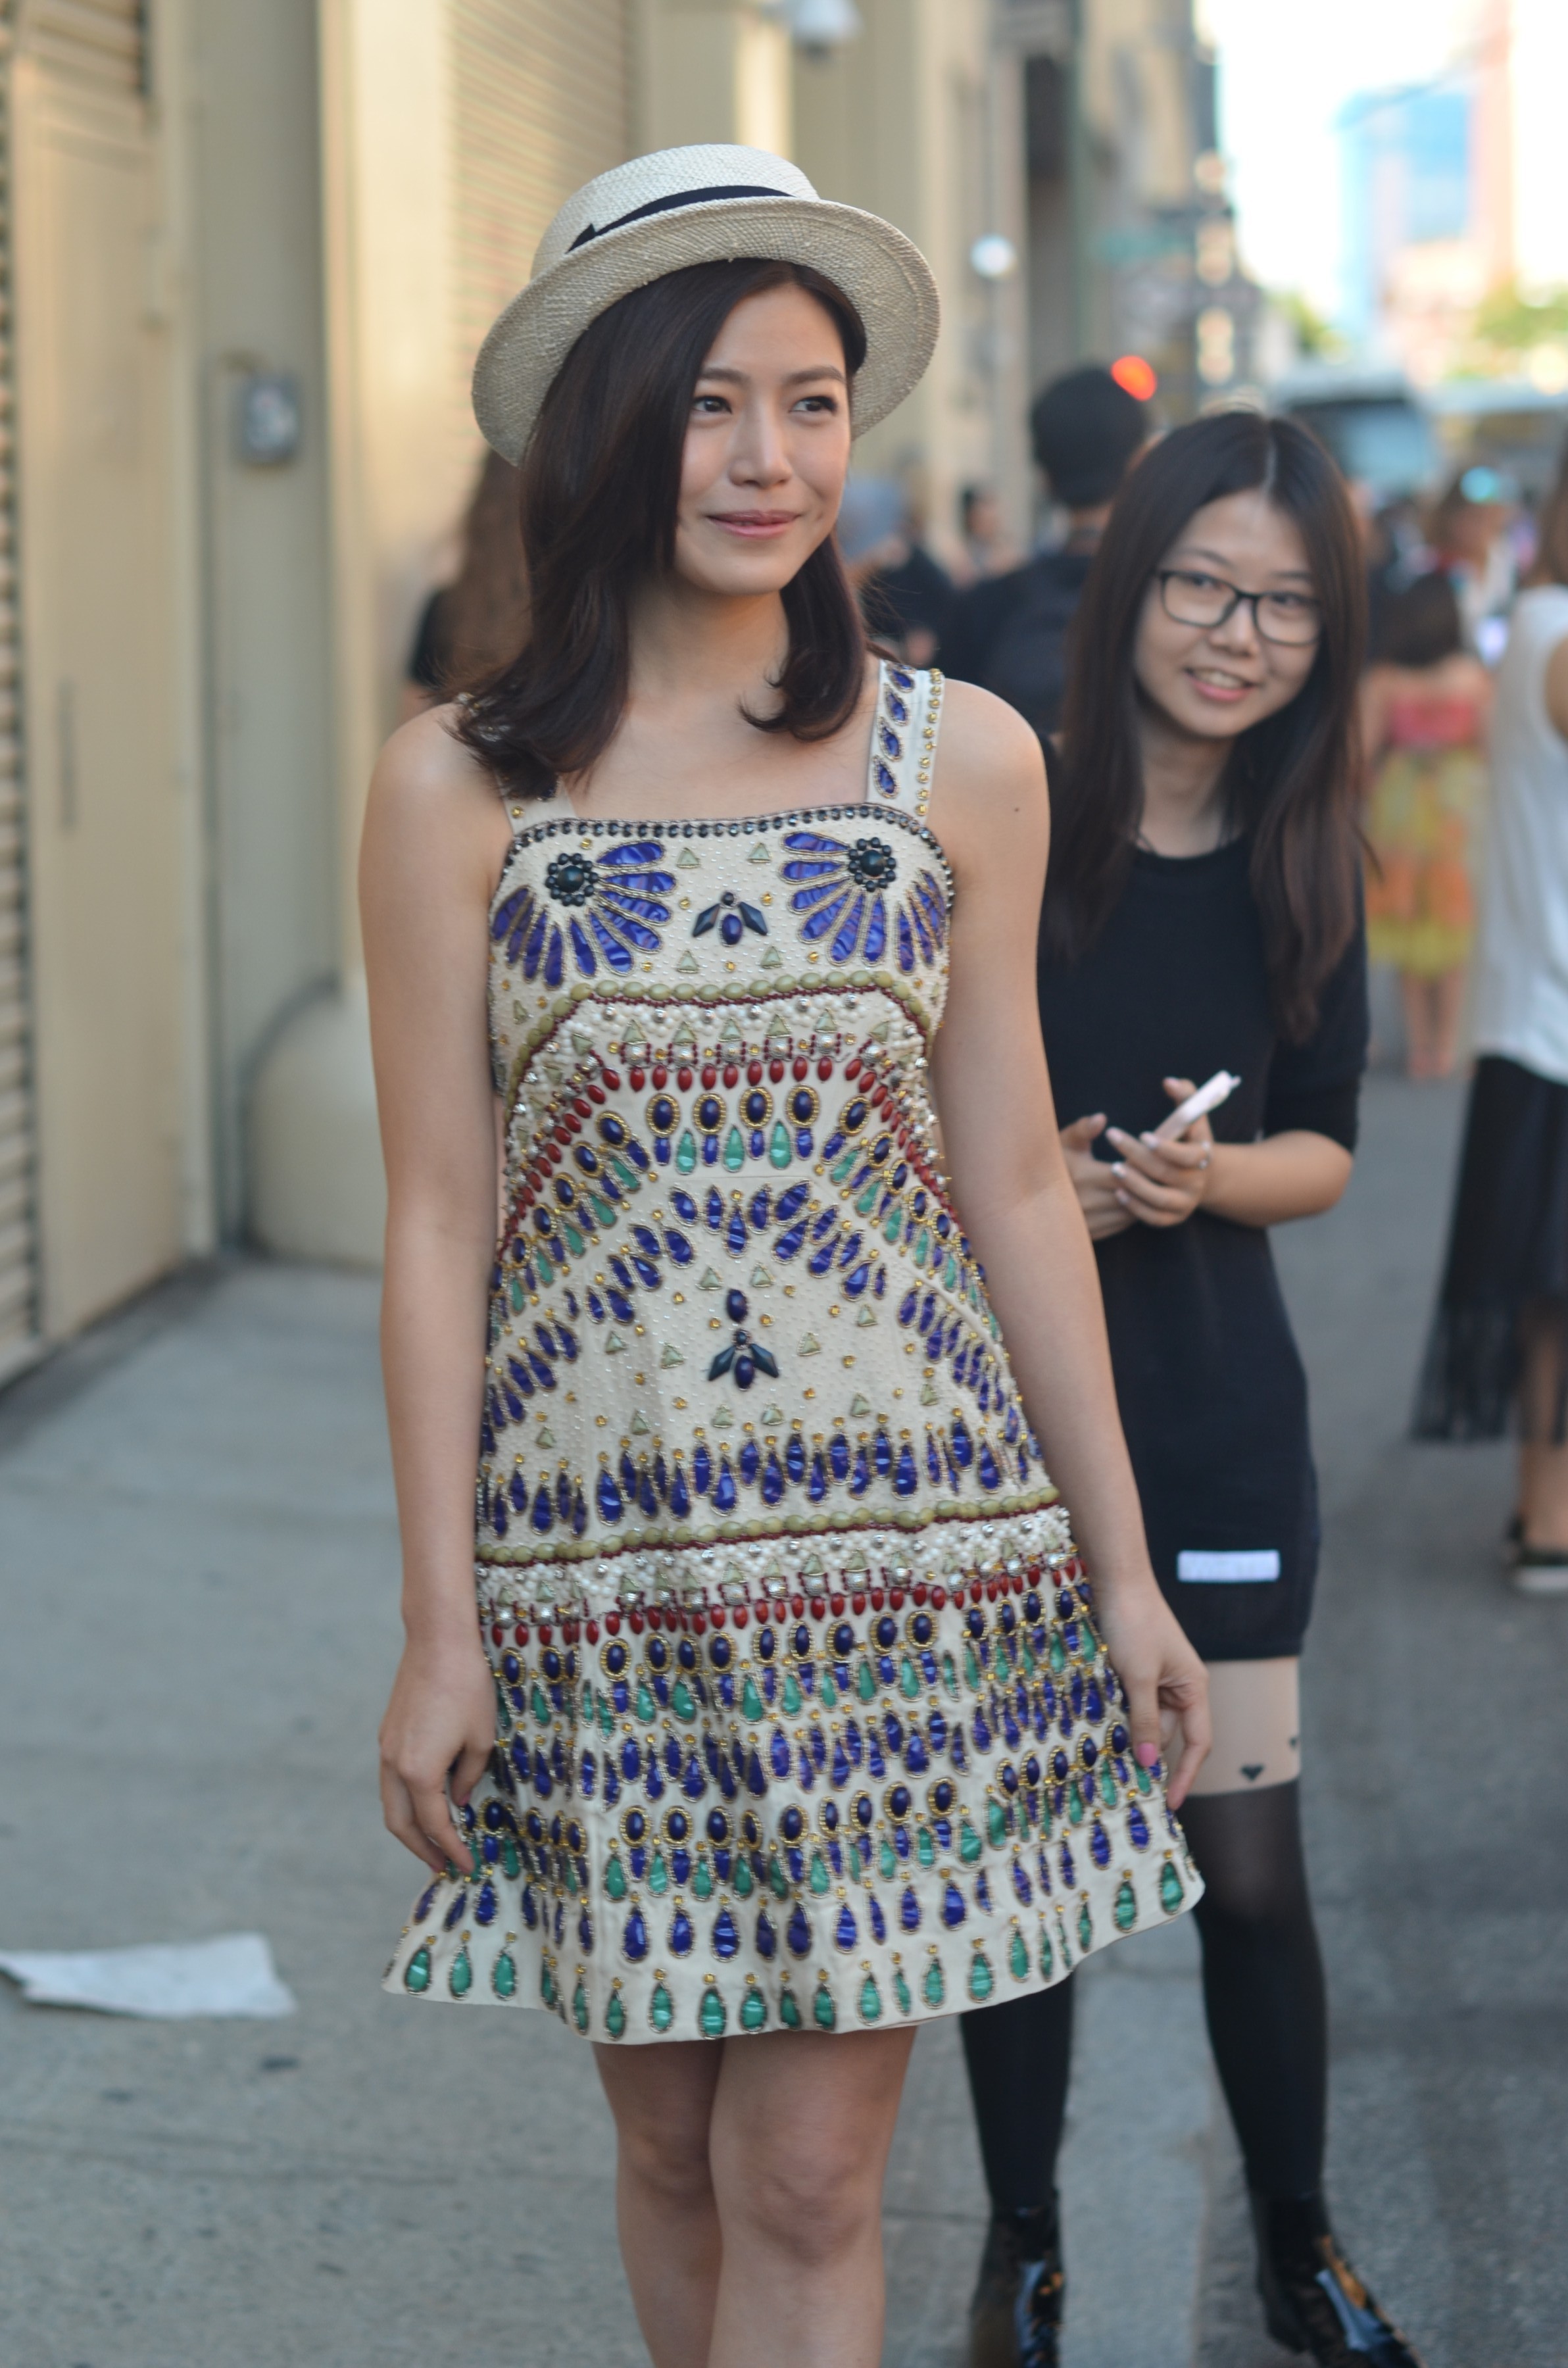 Chinese actress at NYFW